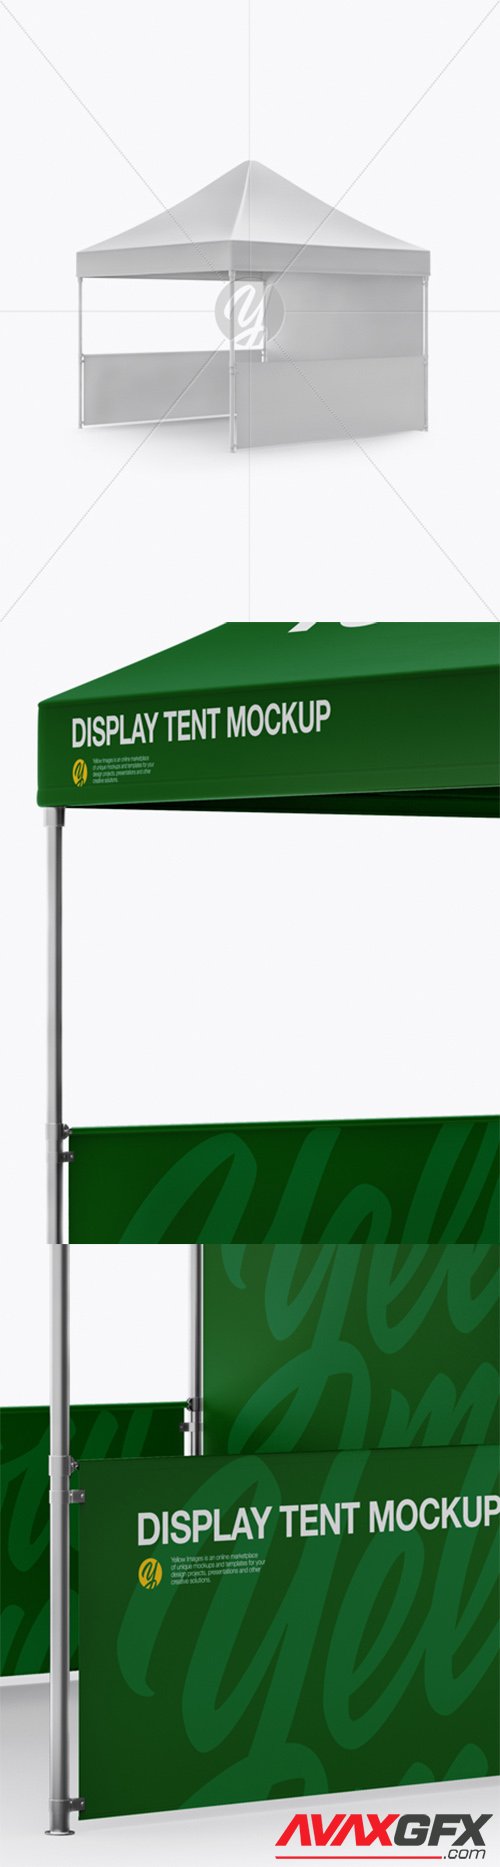 Display Tent Mockup - Half Side View 30574 TIF